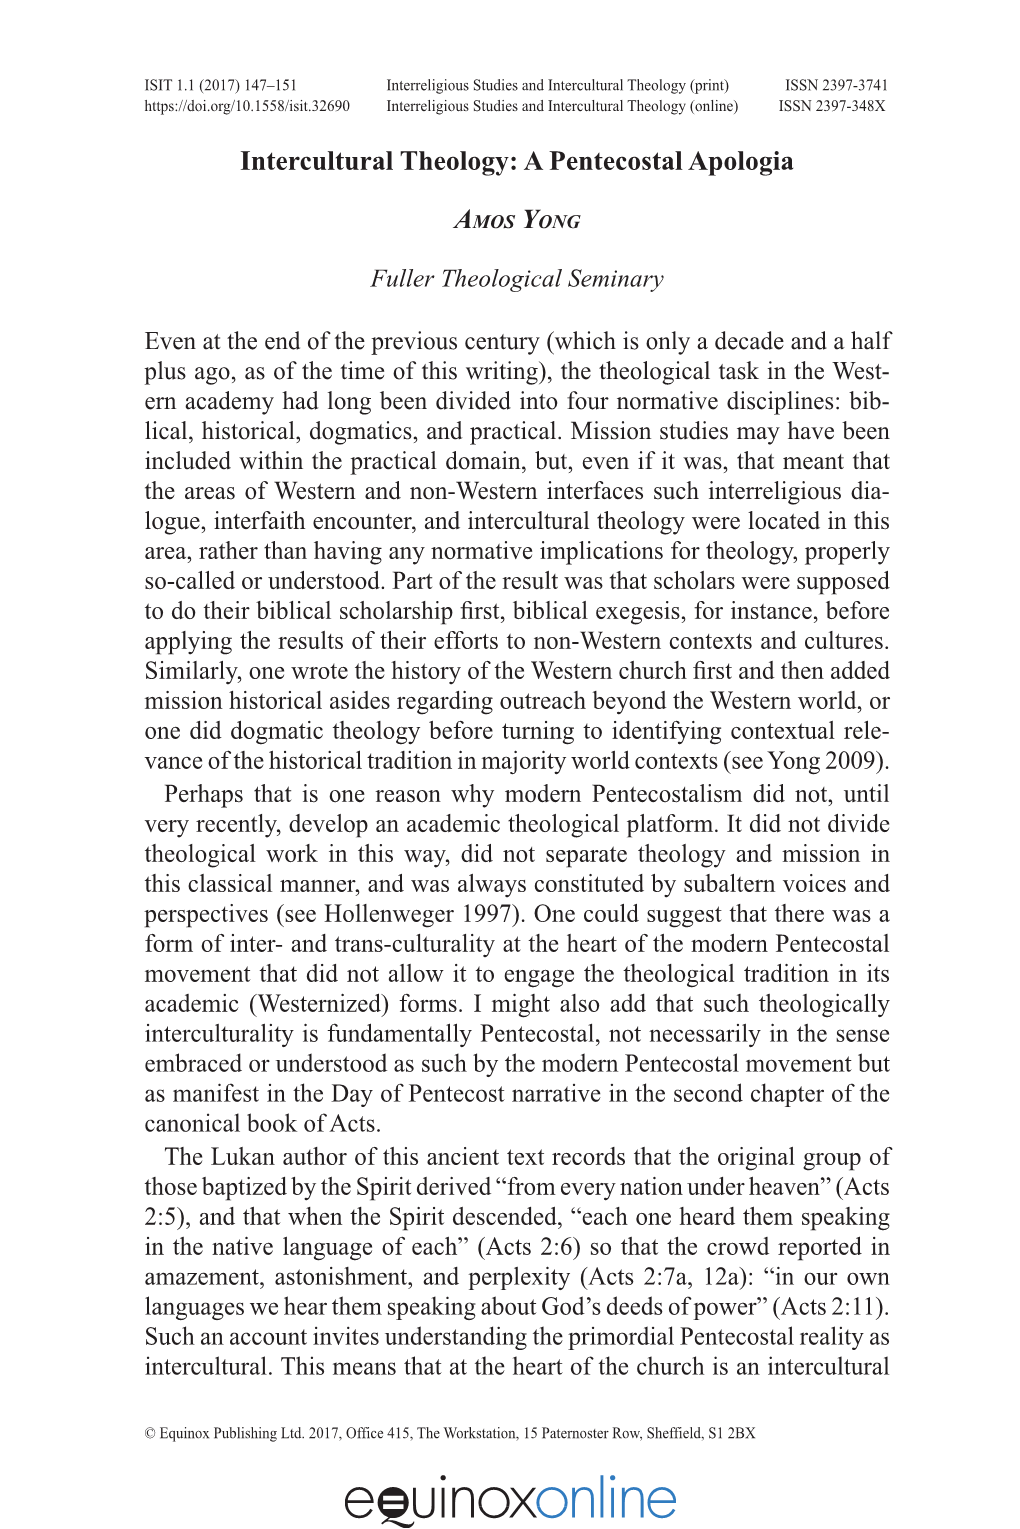 Intercultural Theology: a Pentecostal Apologia